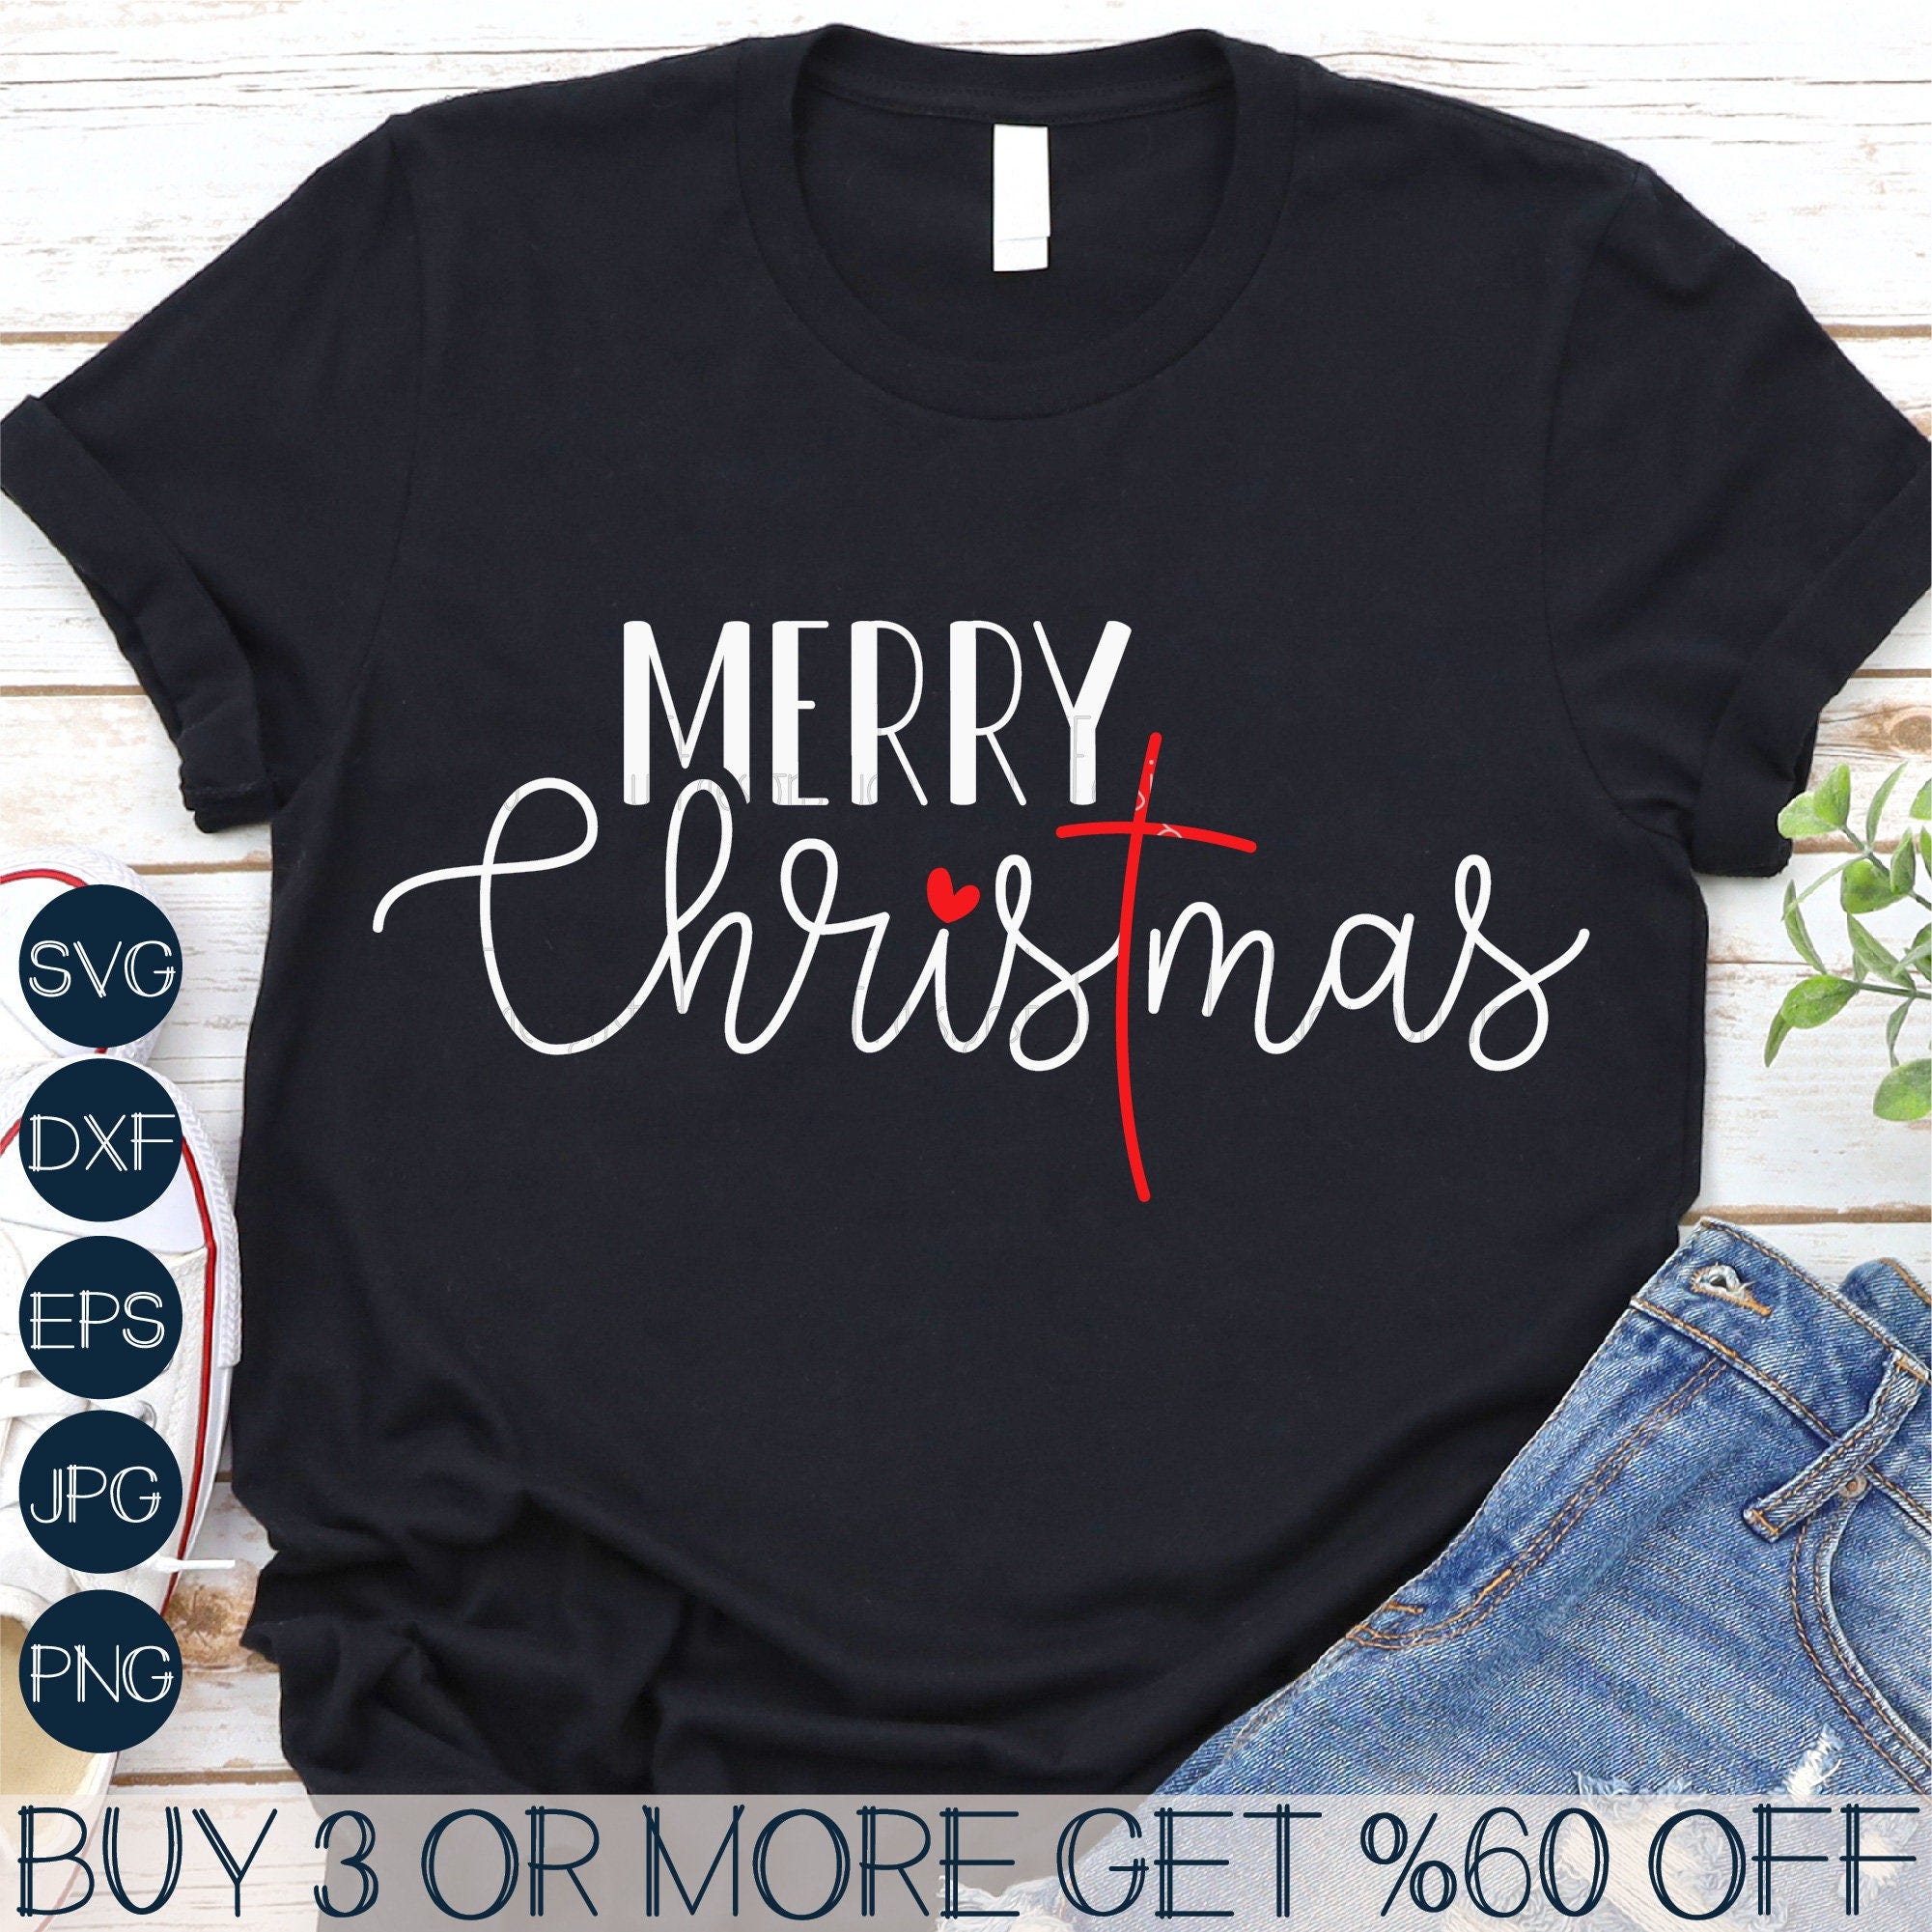 Merry Christmas SVG, Religious SVG, Christmas Shirt SVG, Popular Svg, Christian Svg, Png, Svg File For Cricut, Sublimation Designs Downloads